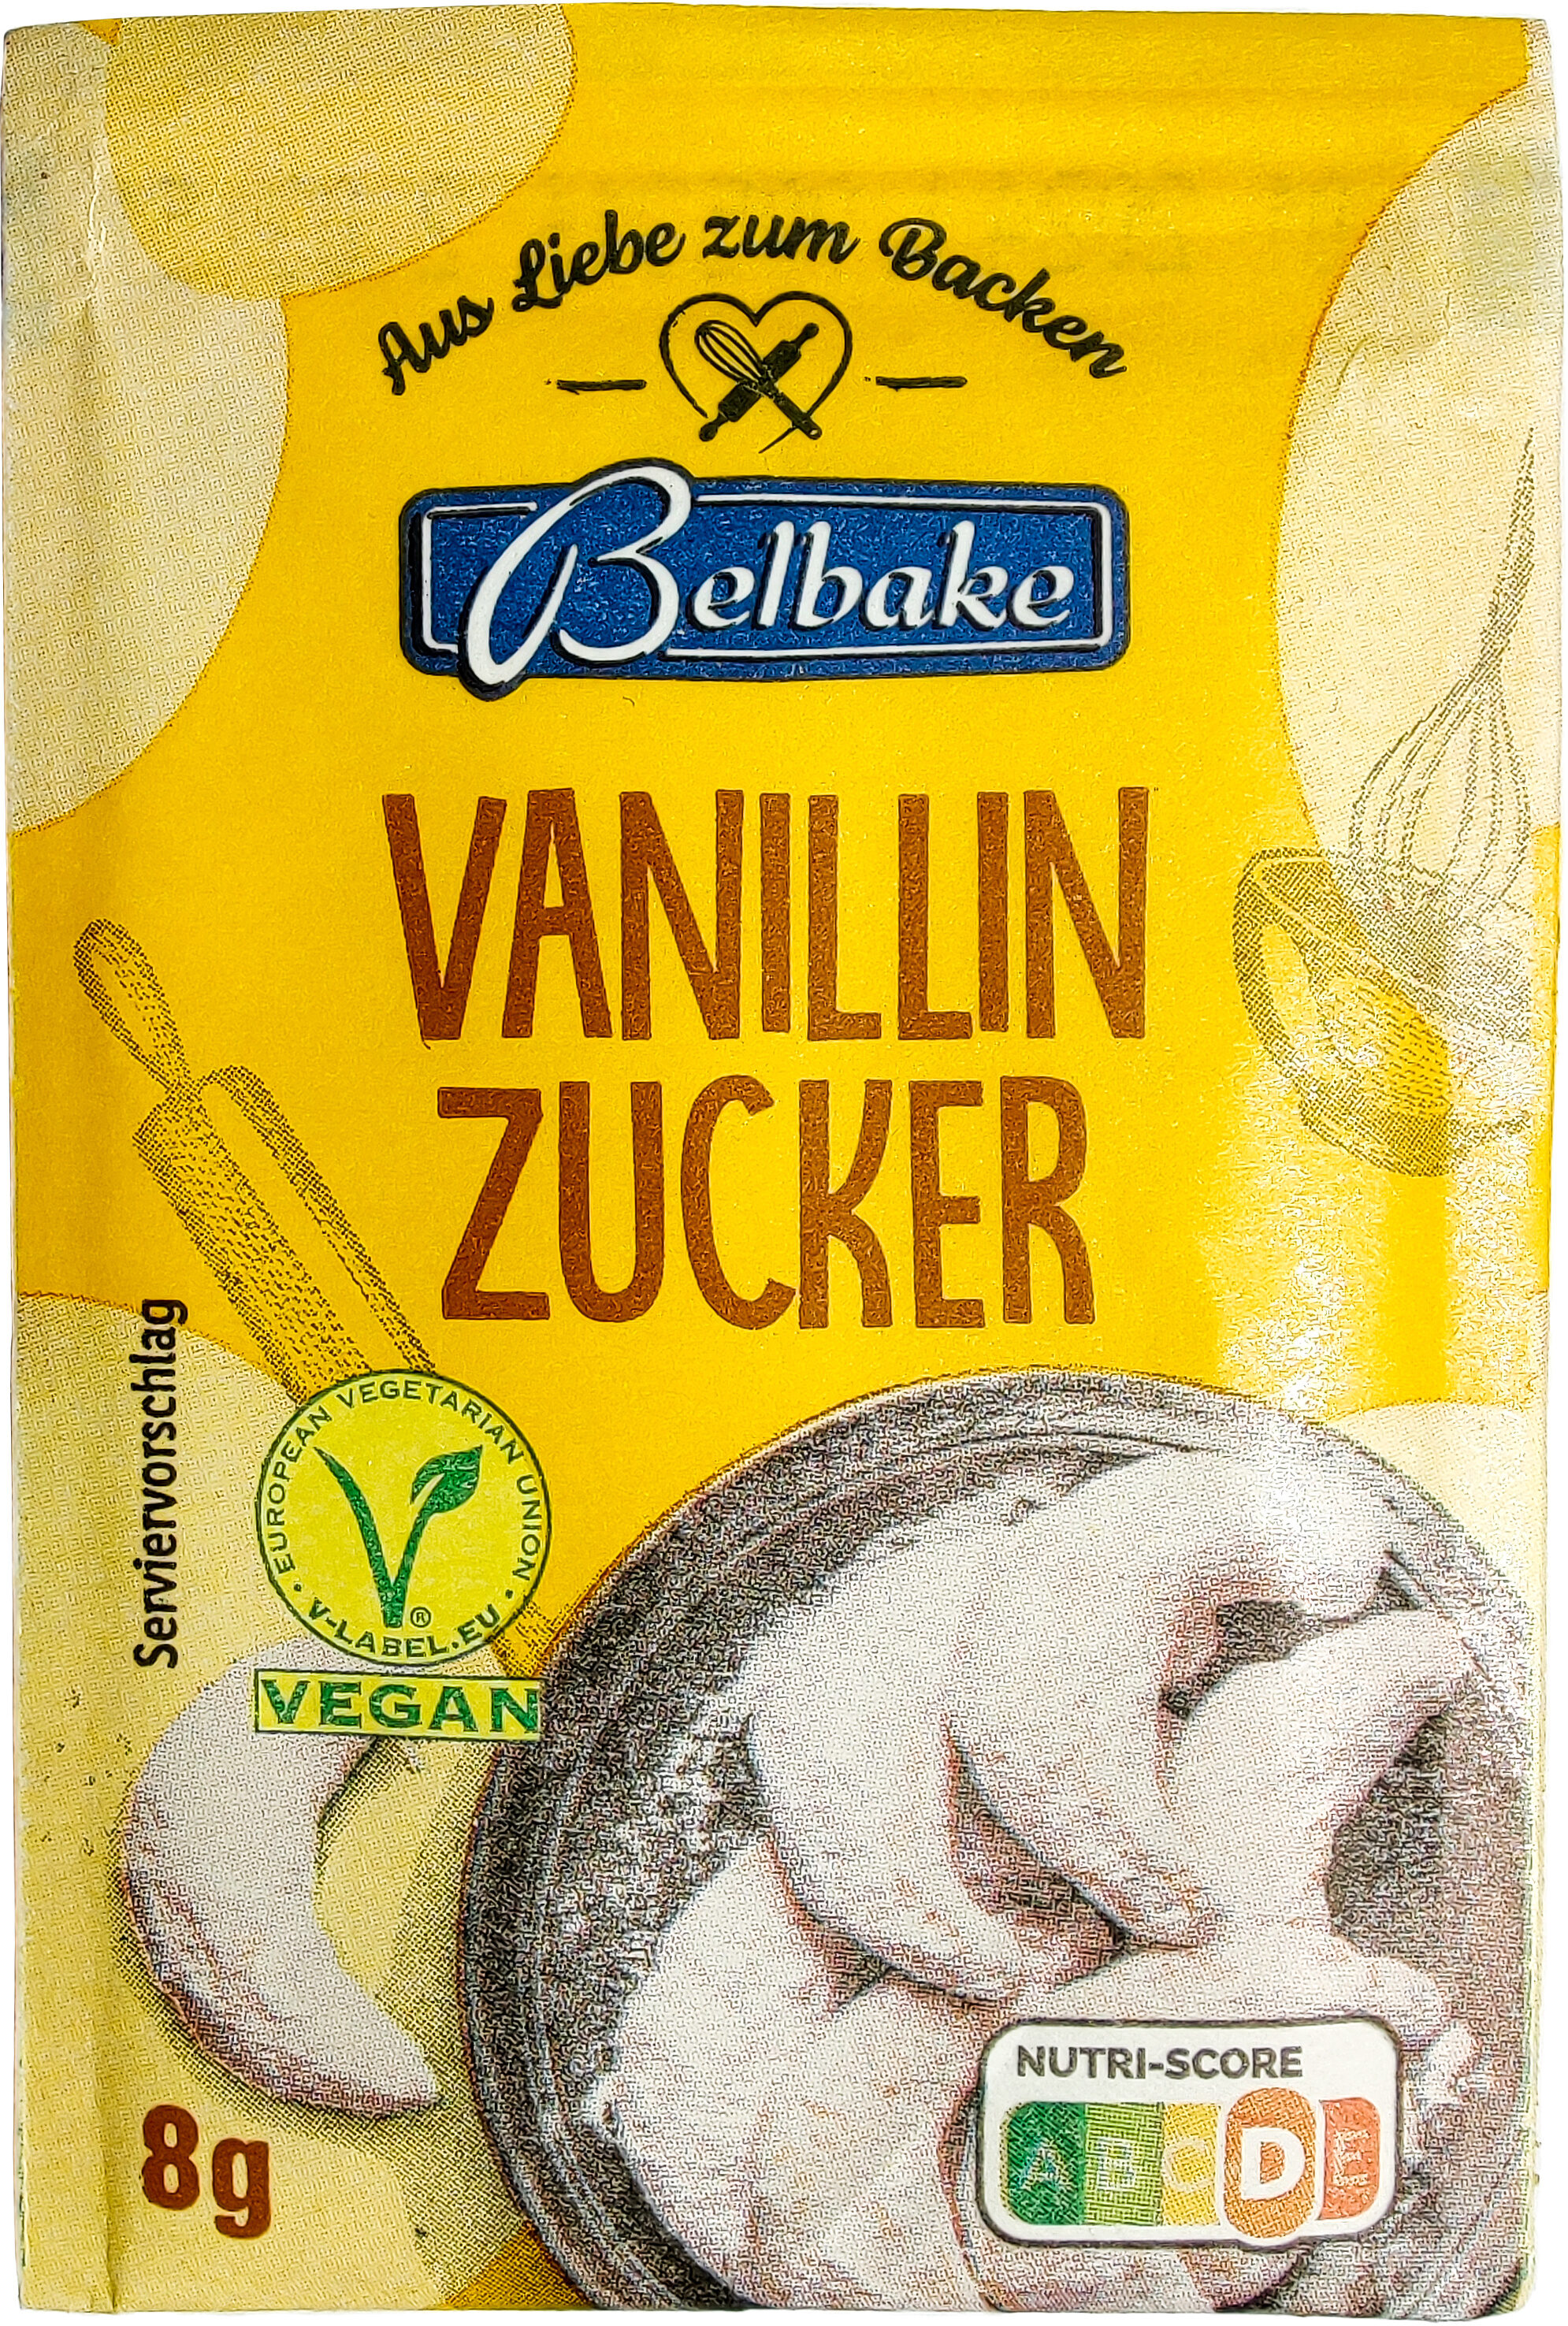 Vanillin Zucker - Product - de